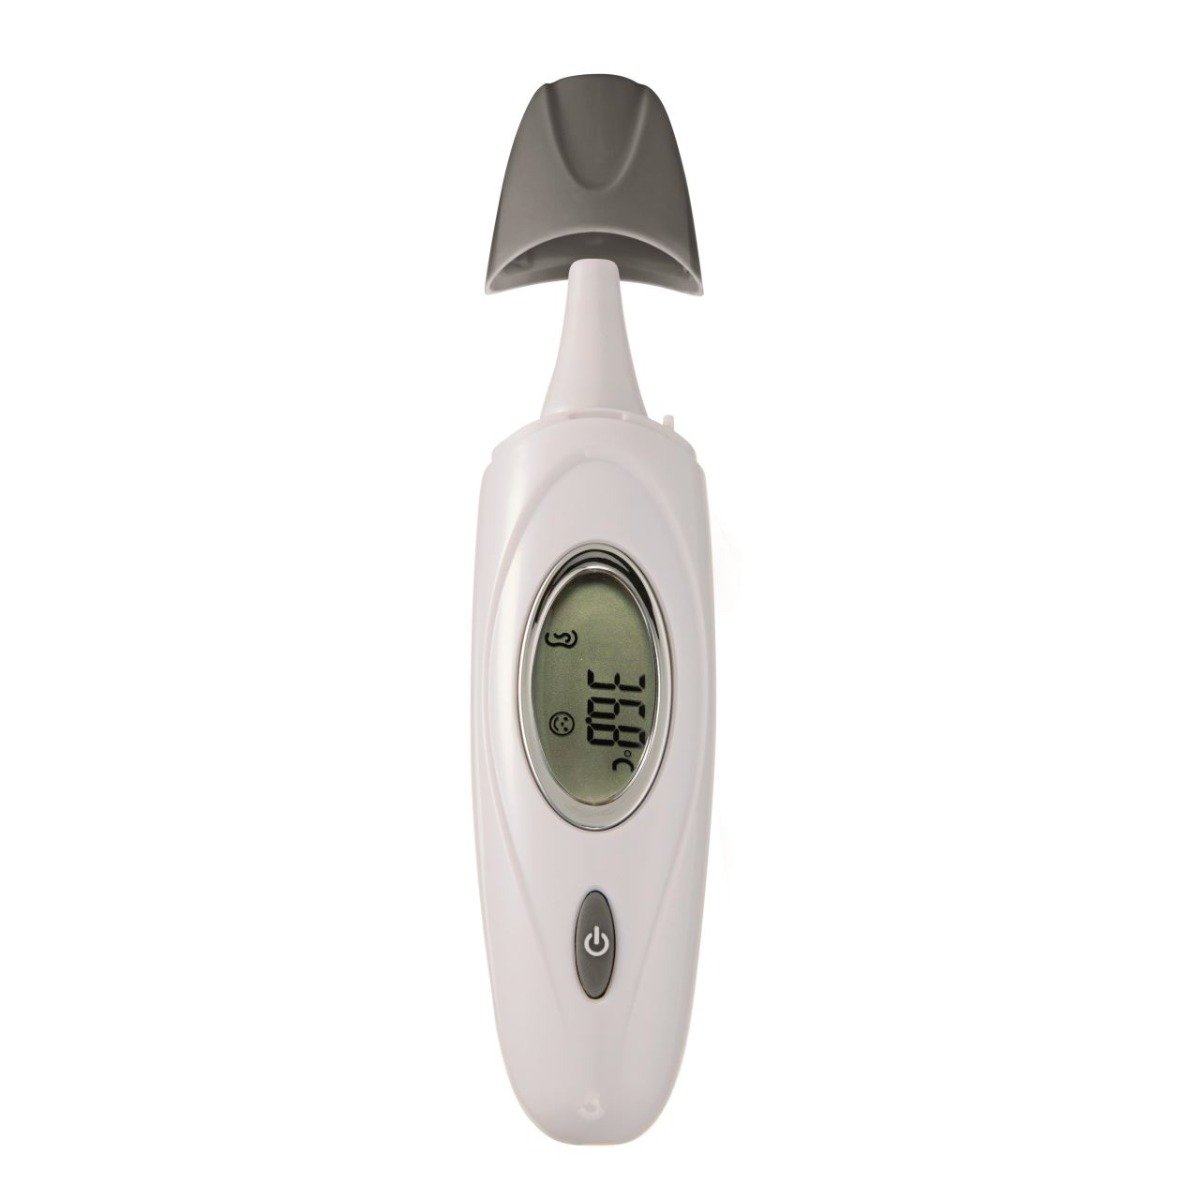 Termometru cu infrarosii, Reer, pentru tampla si ureche, Skintemp, 98020